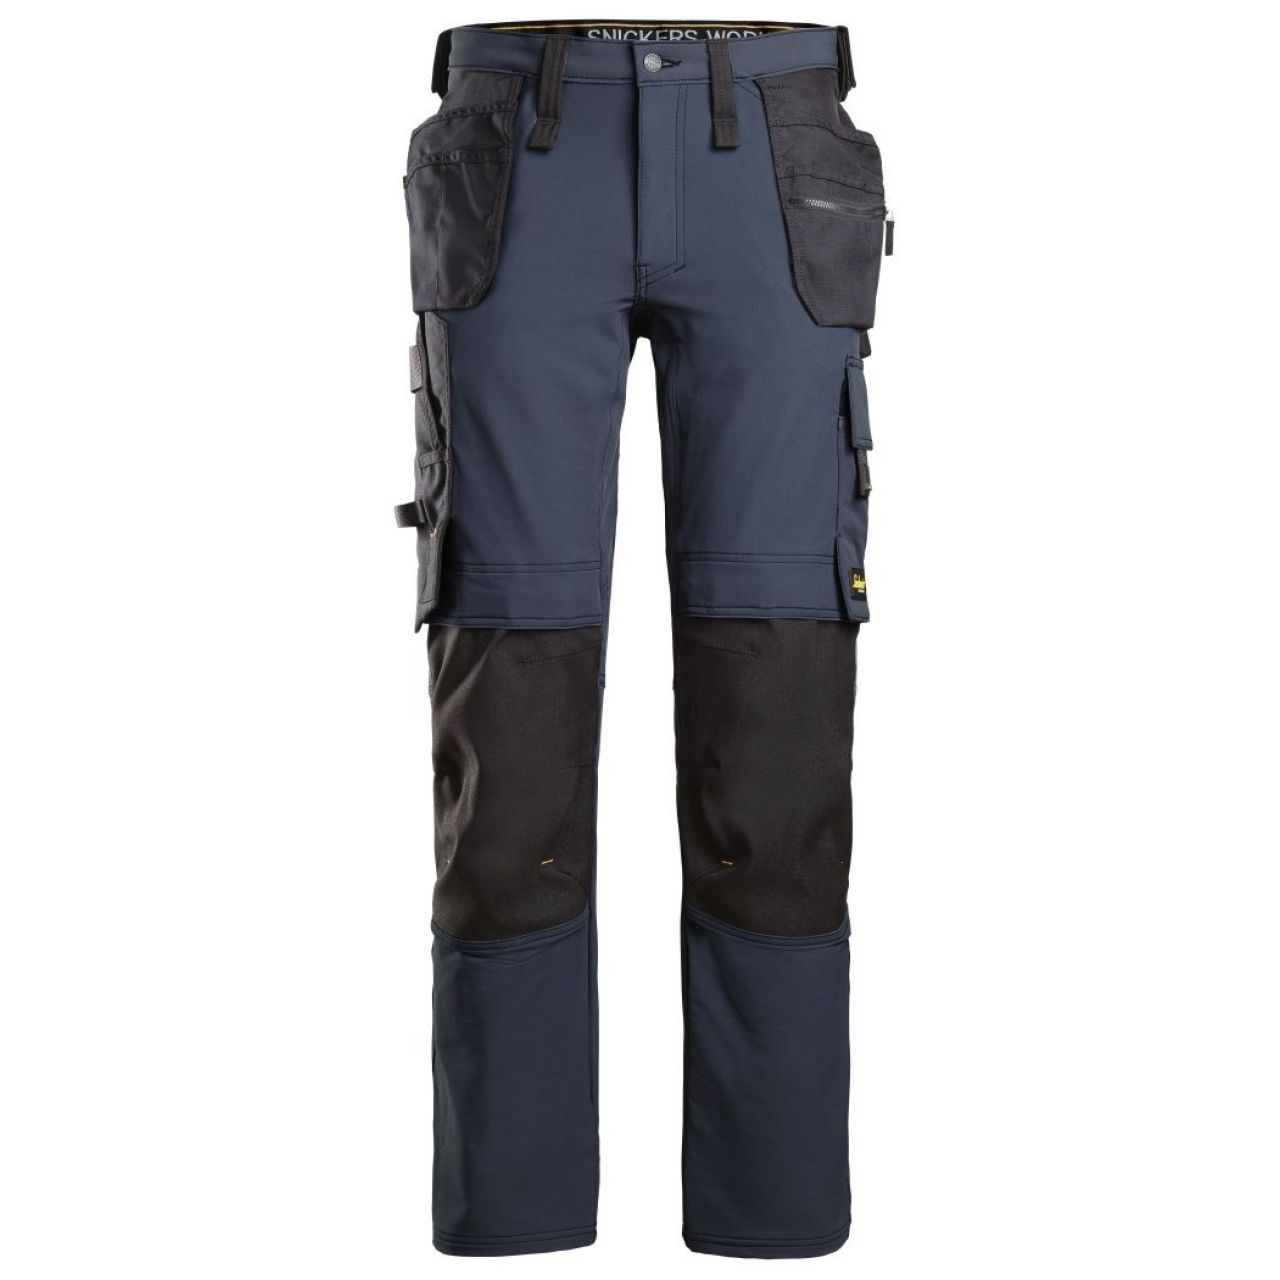 Pantalon elastico AllroundWork bolsillos flotantes azul marino-negro talla 060